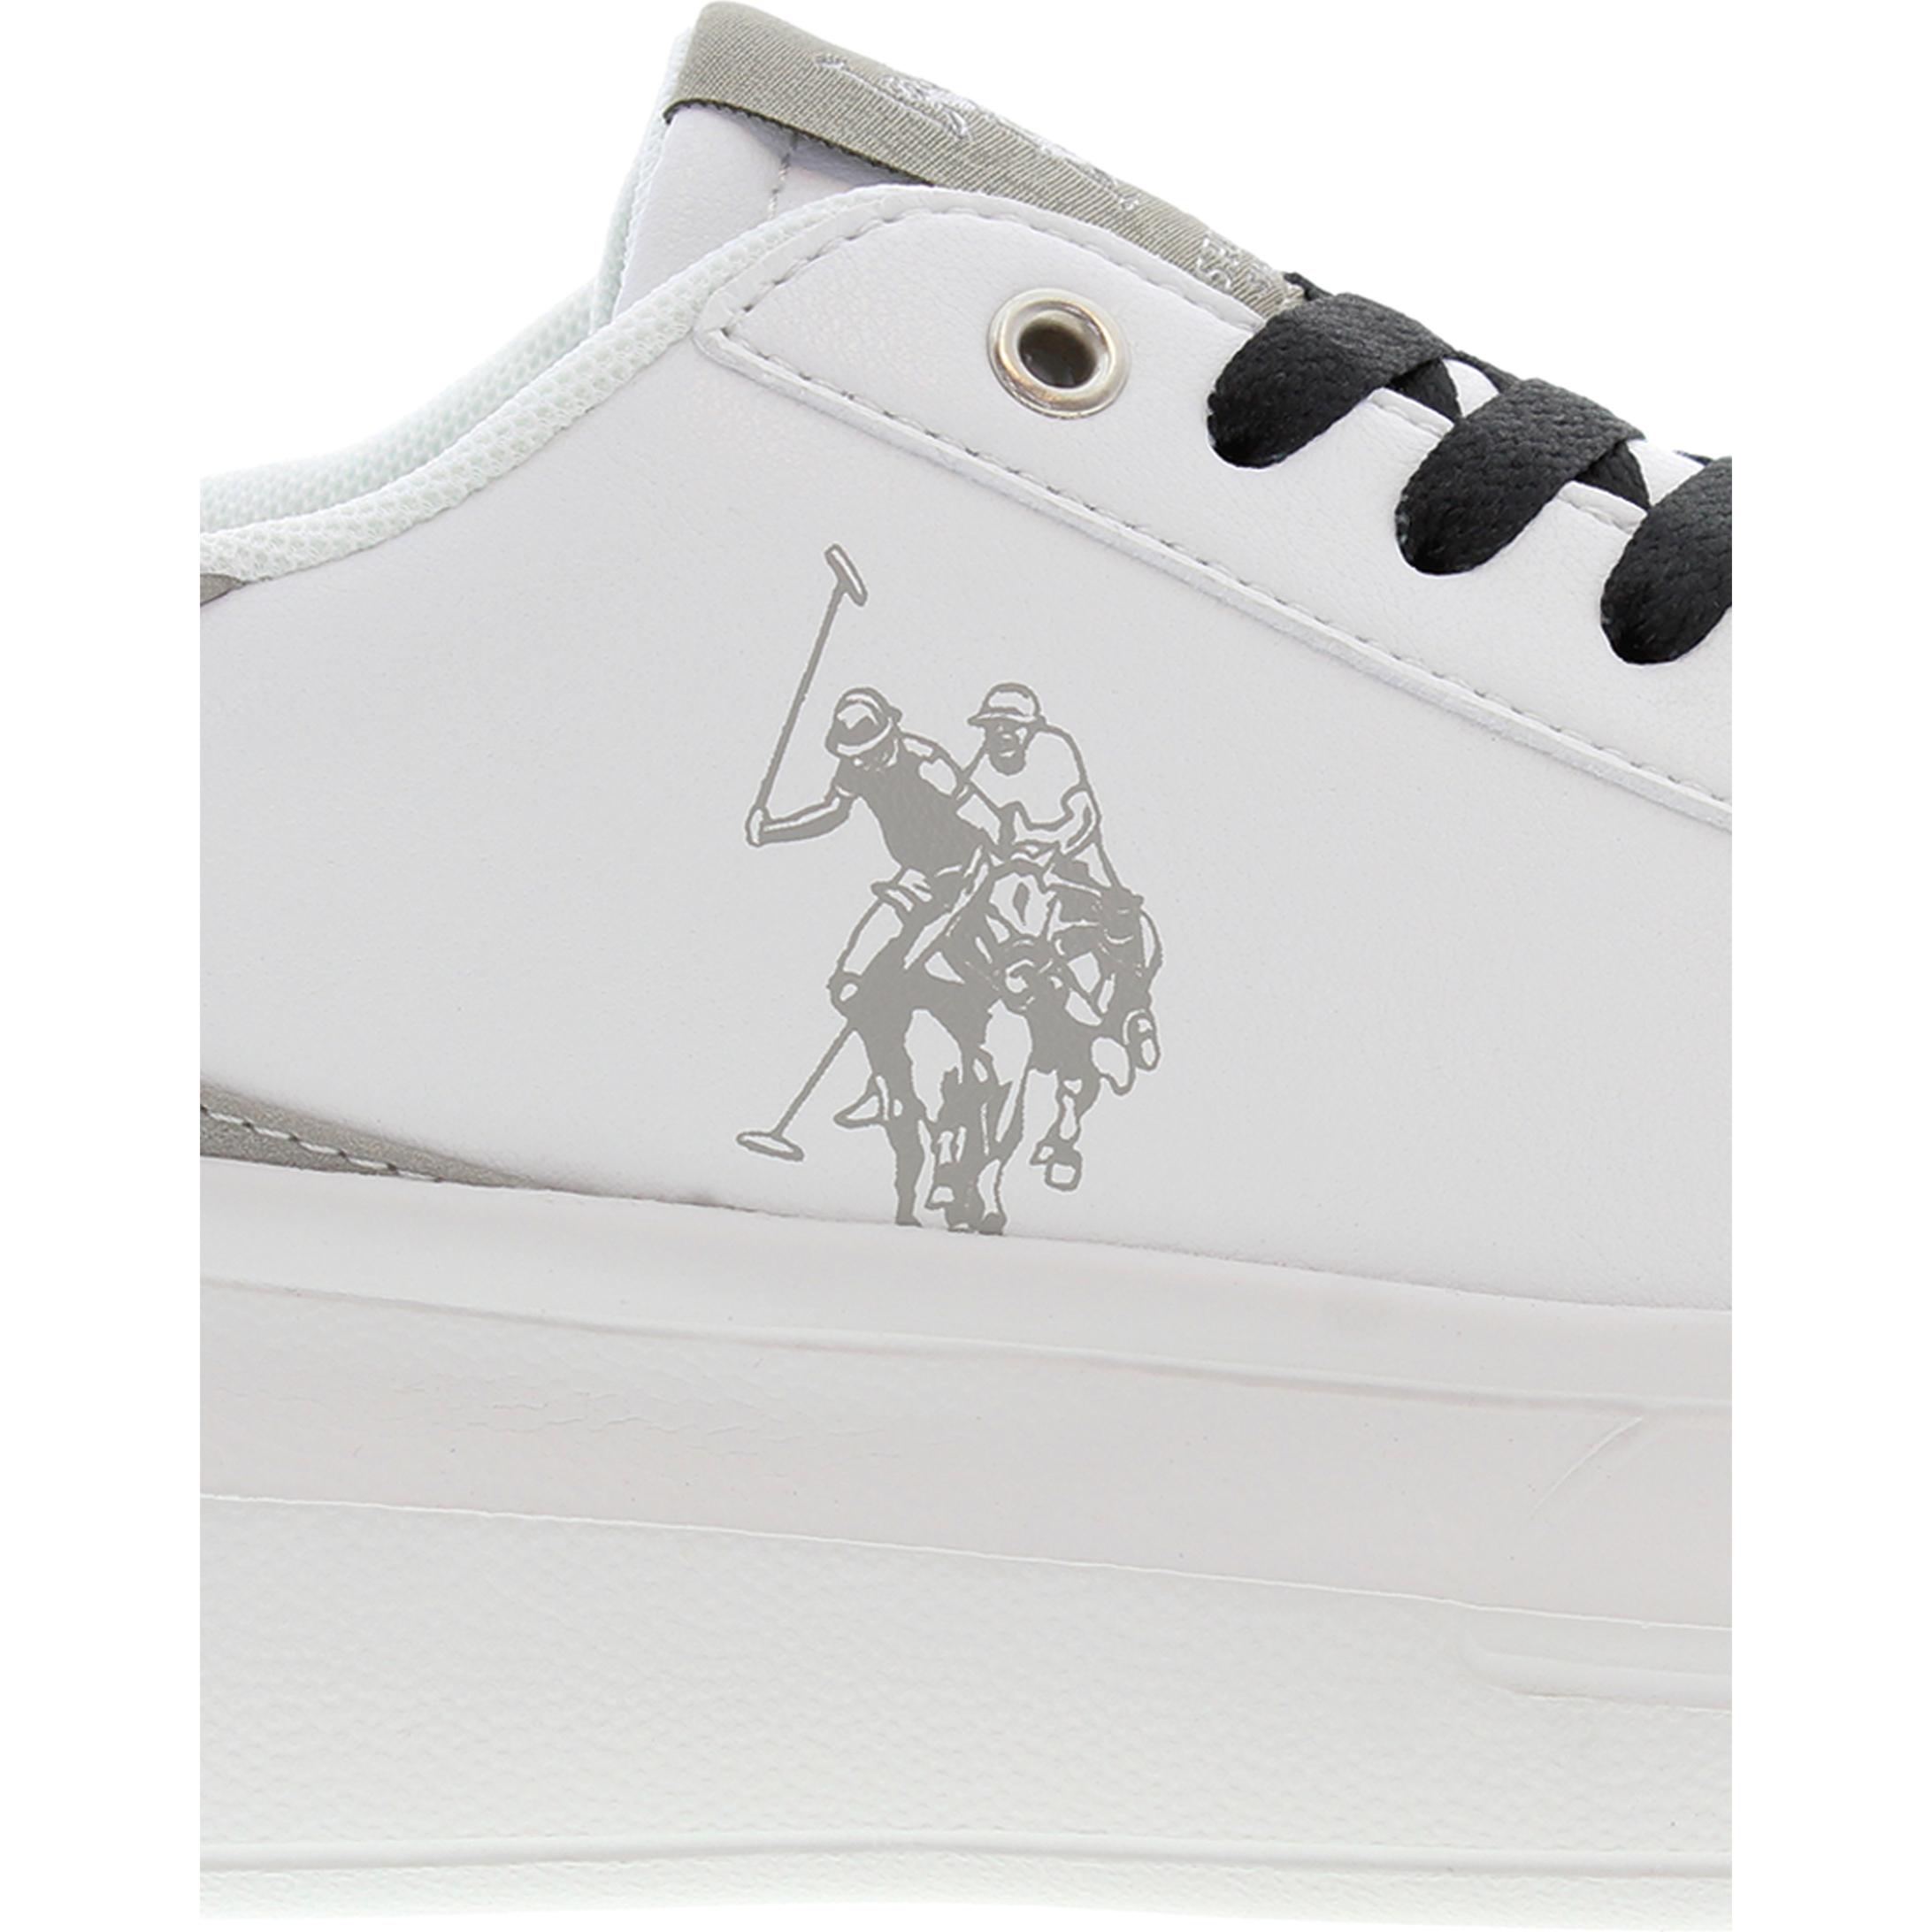 Sneakers U.S. Polo Assn. bianco-grigio chiaro